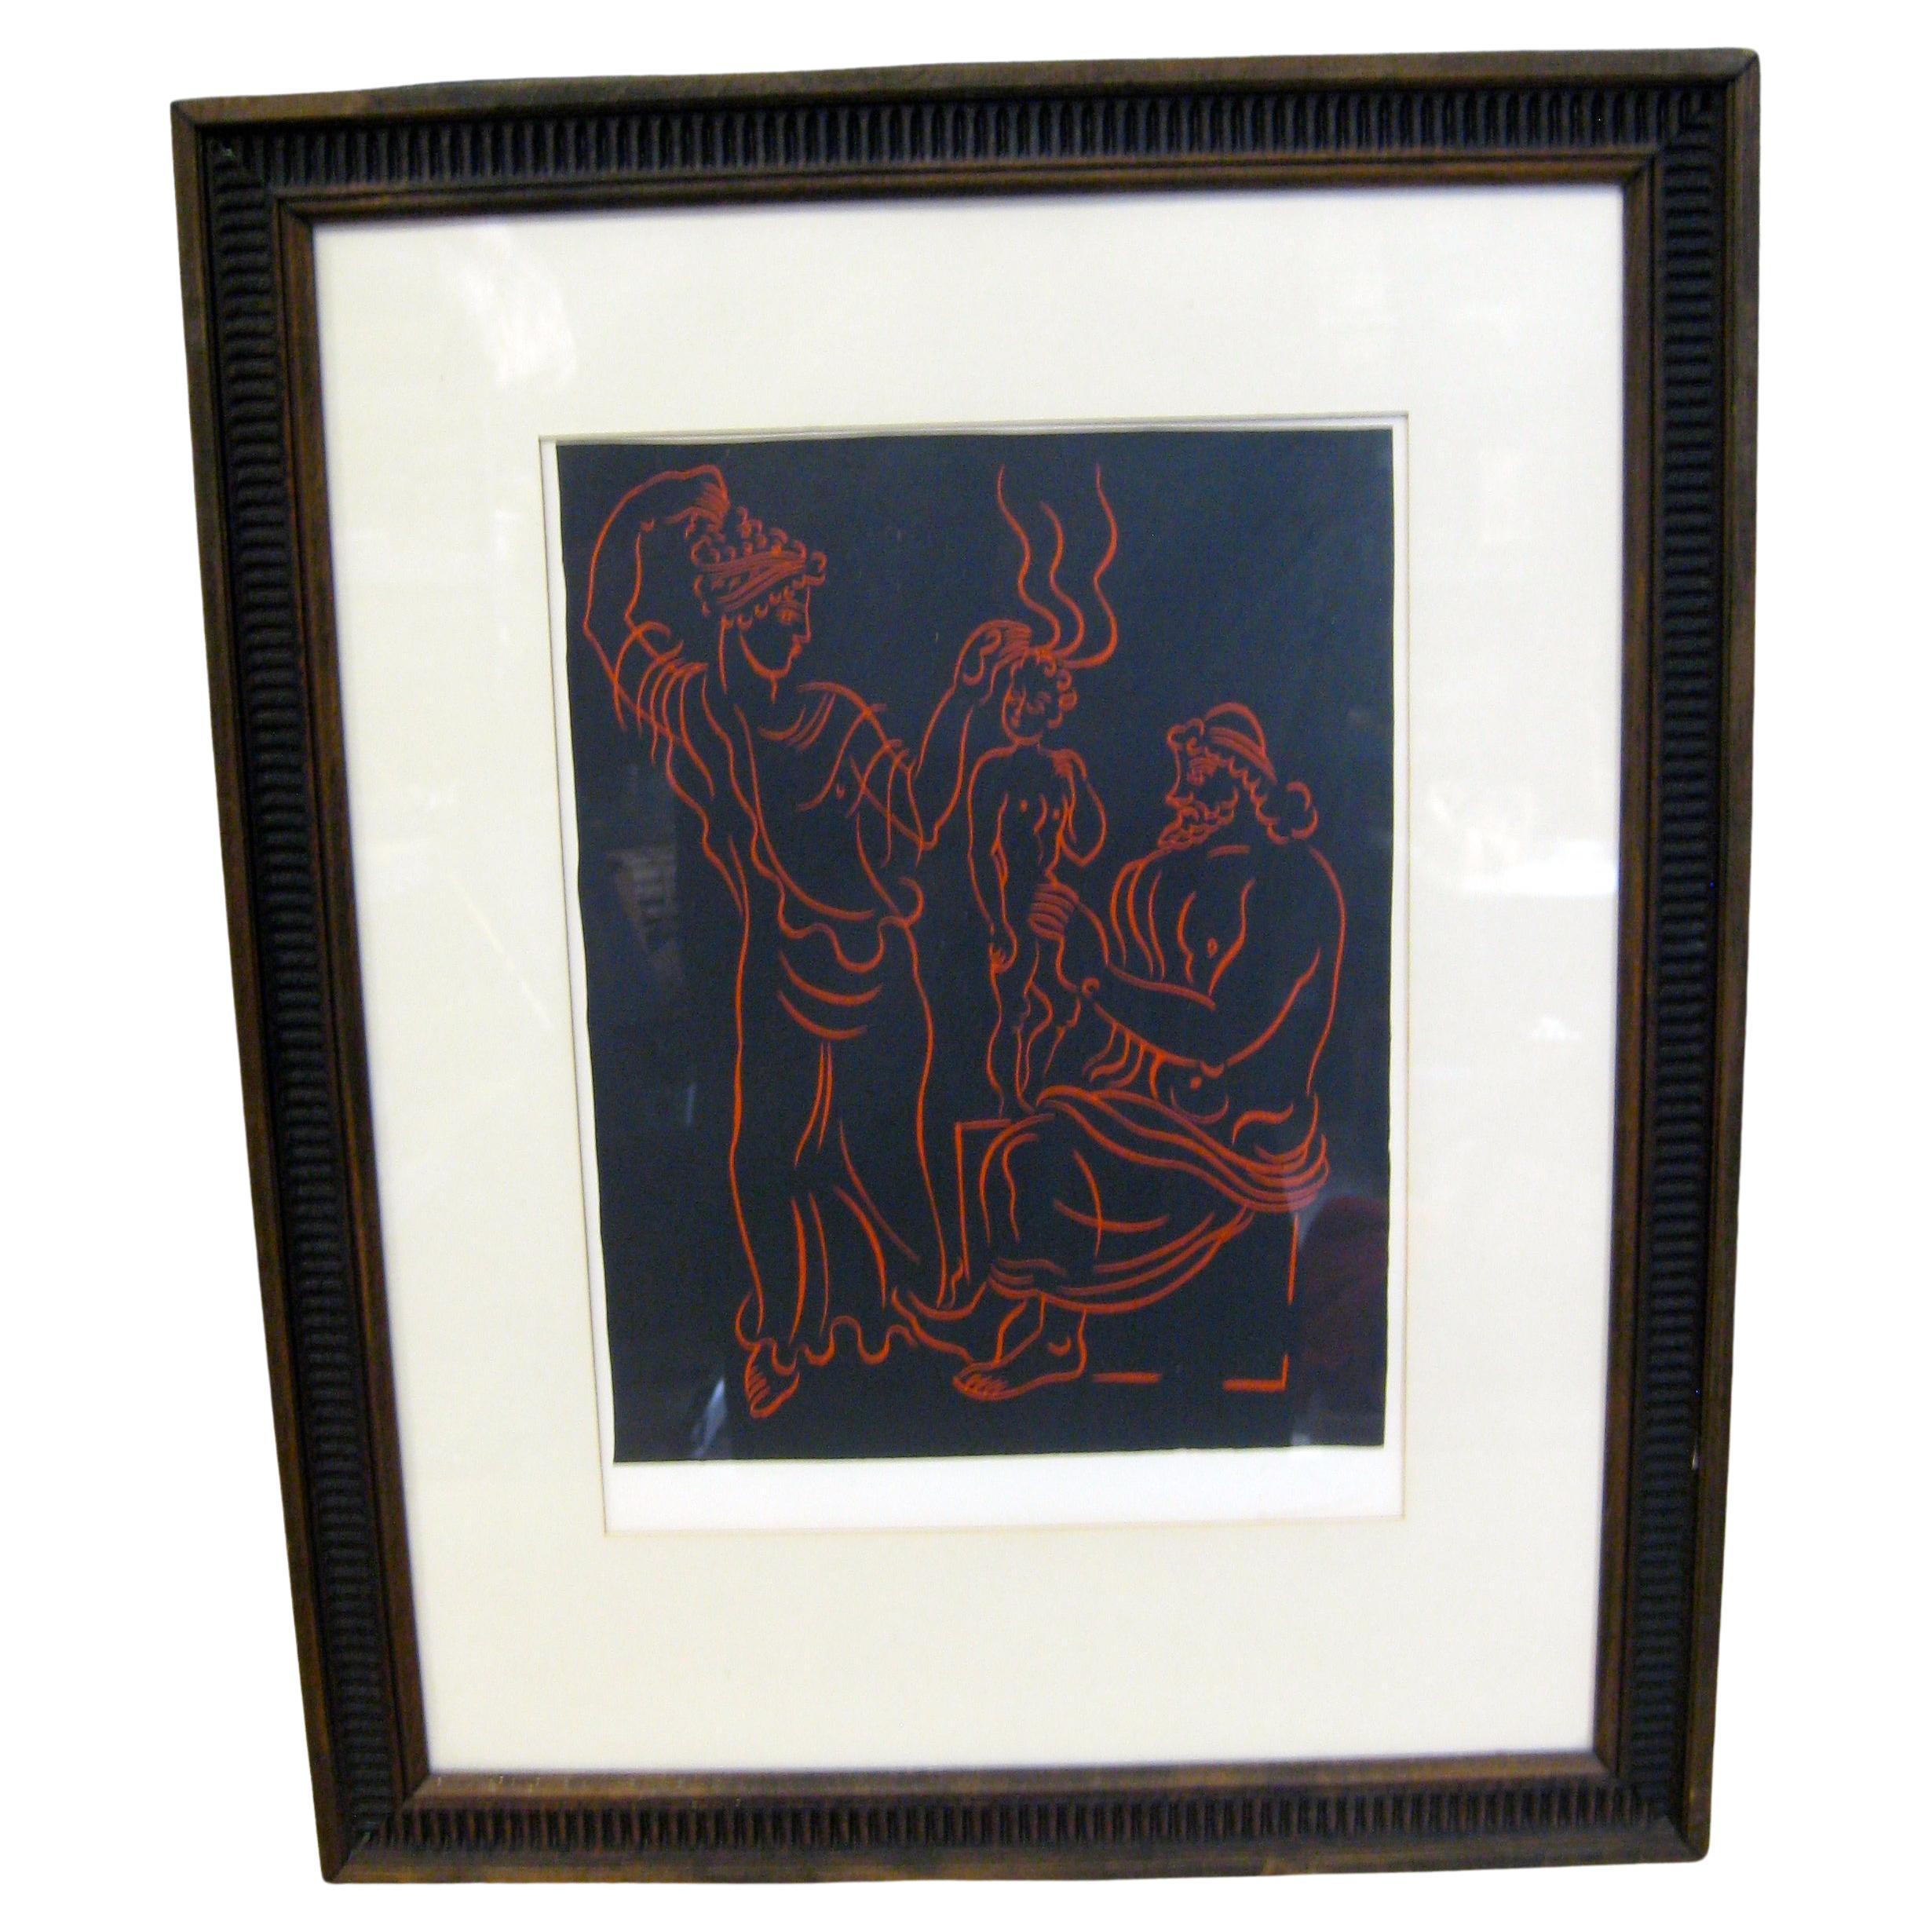 Andre Derain "L'enfant" Original Lithograph Print Framed French Artist